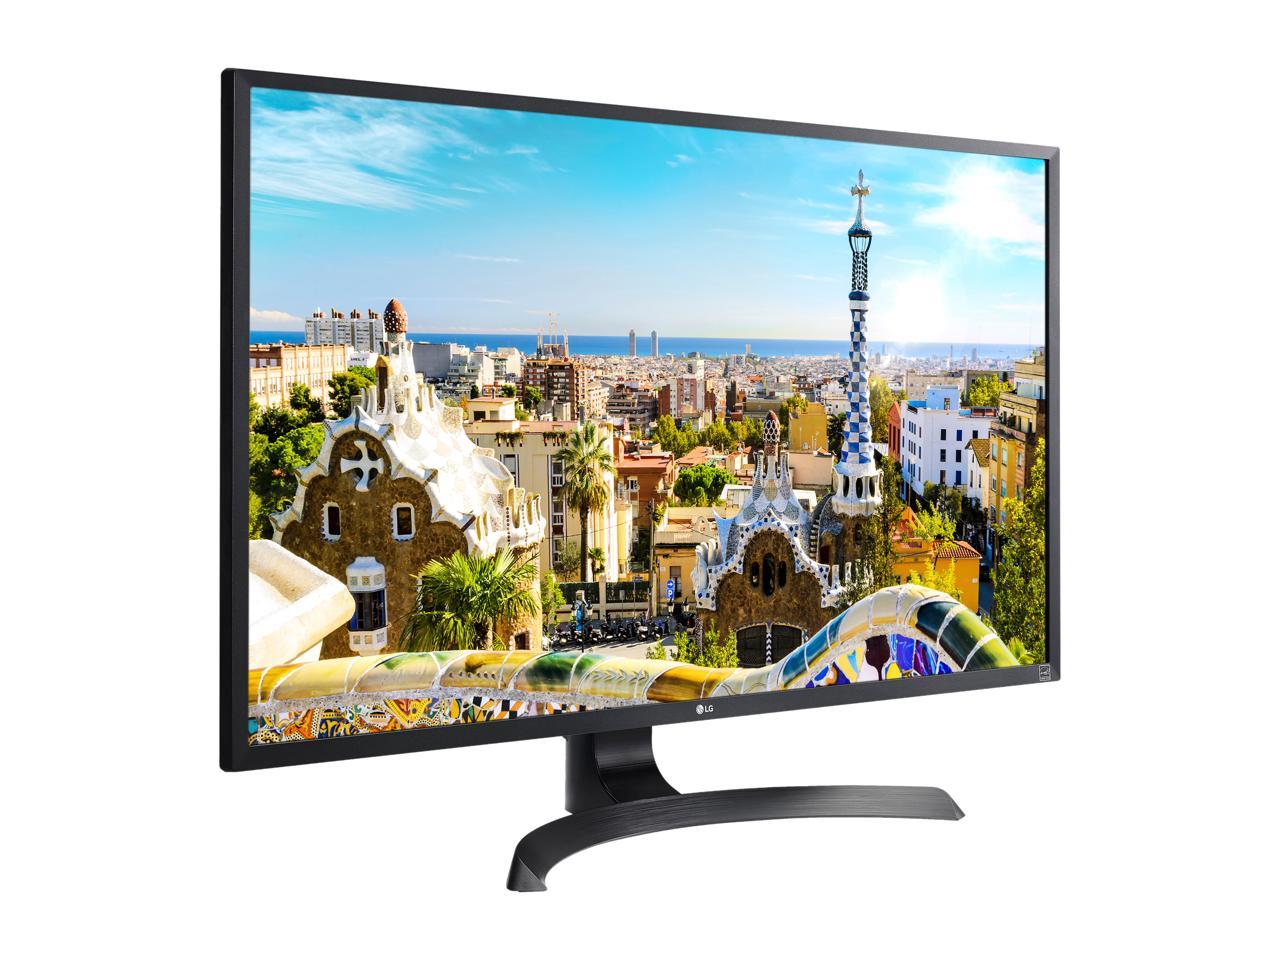 LG 32UD59-B 32" Ultra HD 3840 x 2160 4K 2xHDMI DisplayPort AMD FreeSync Flicker Safe Anti-Glare Backlit LED LCD Monitor